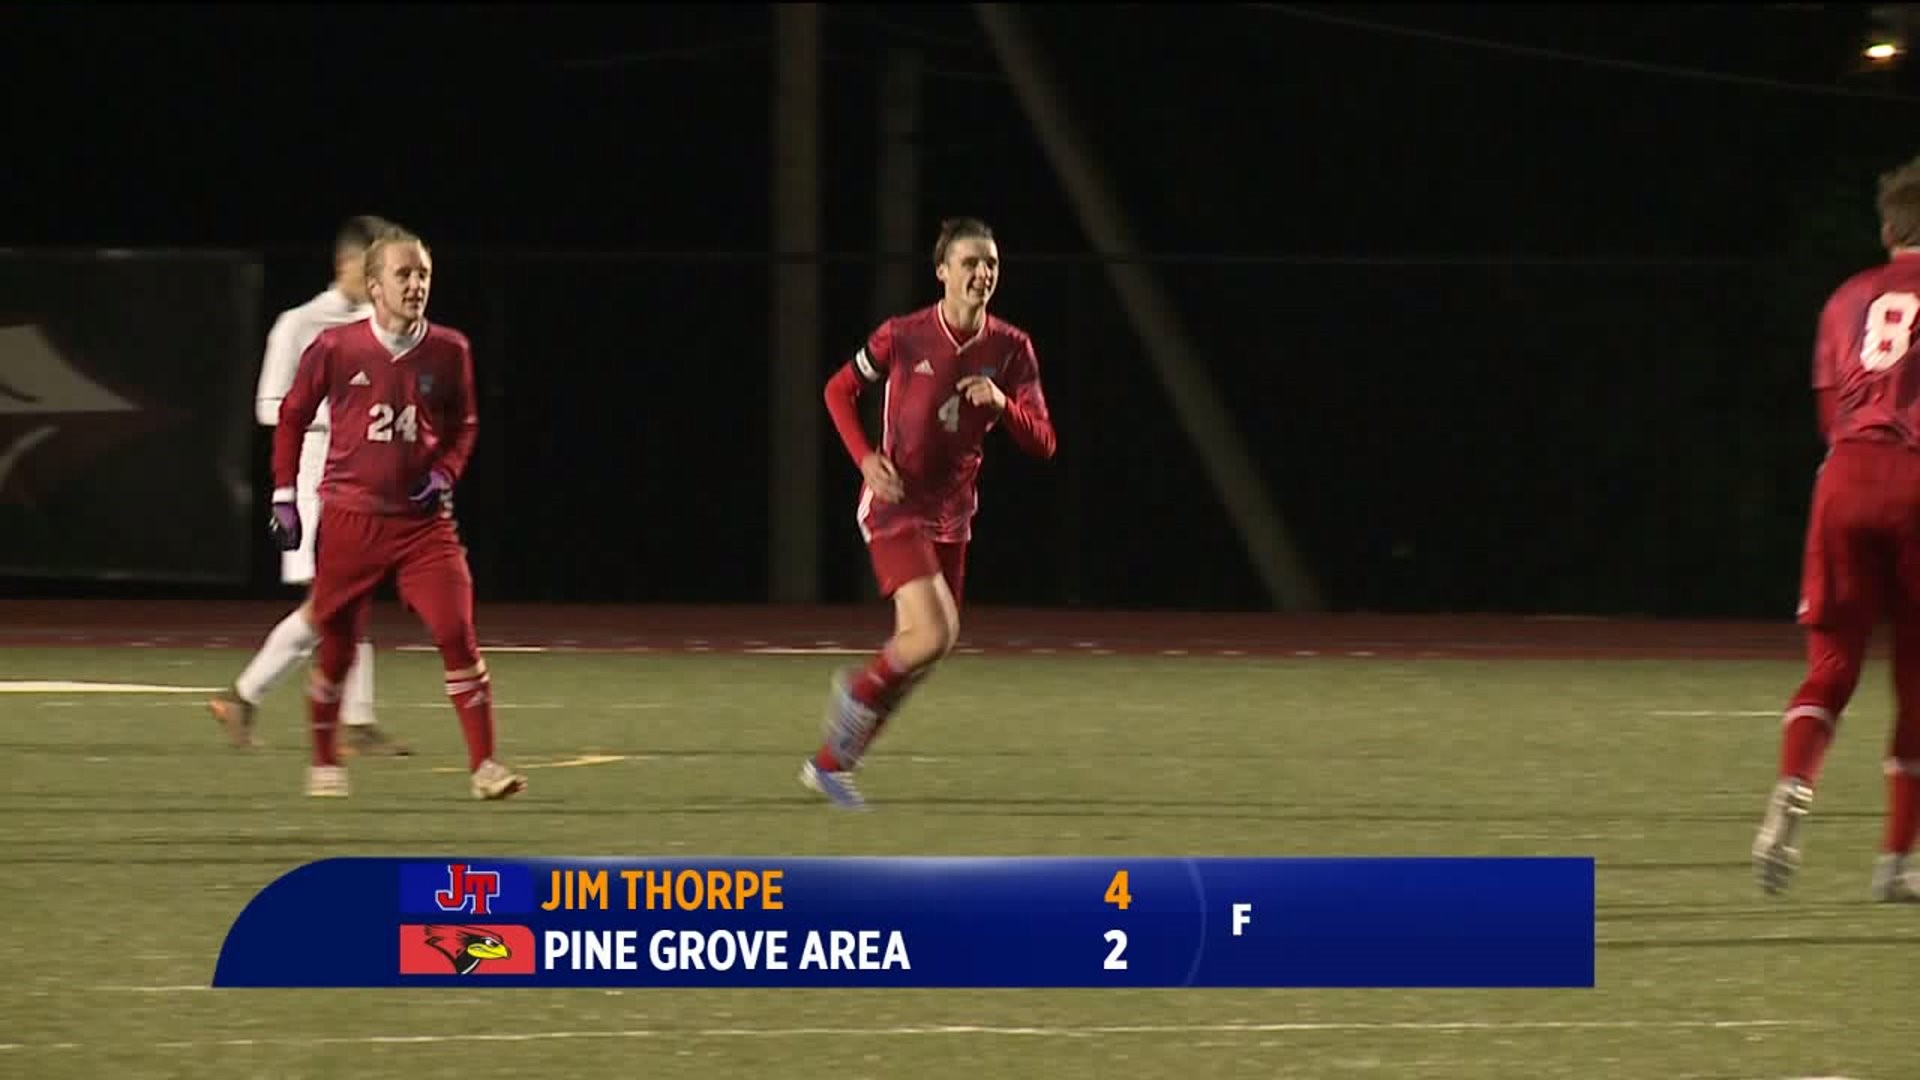 Jim Thorpe vs Pine Grove Area boys soccer